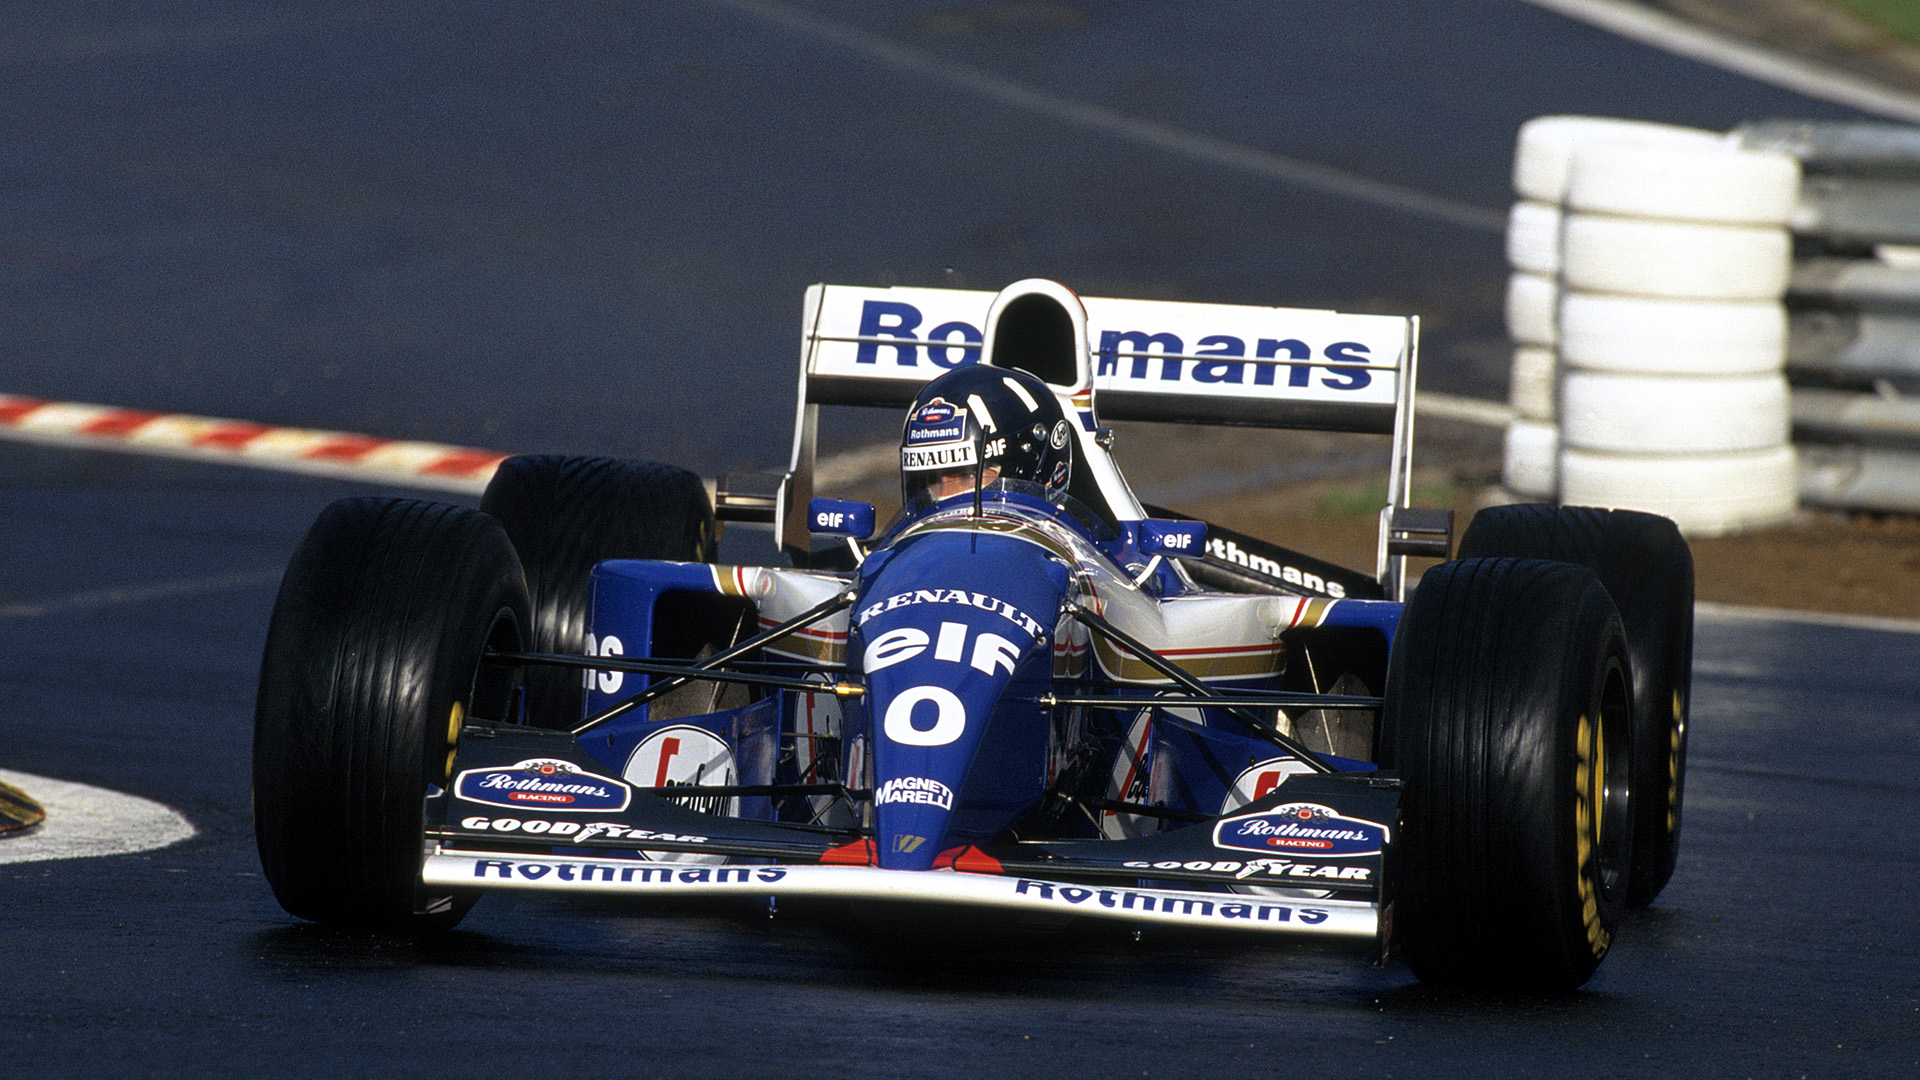  1994 Williams FW16B Wallpaper.